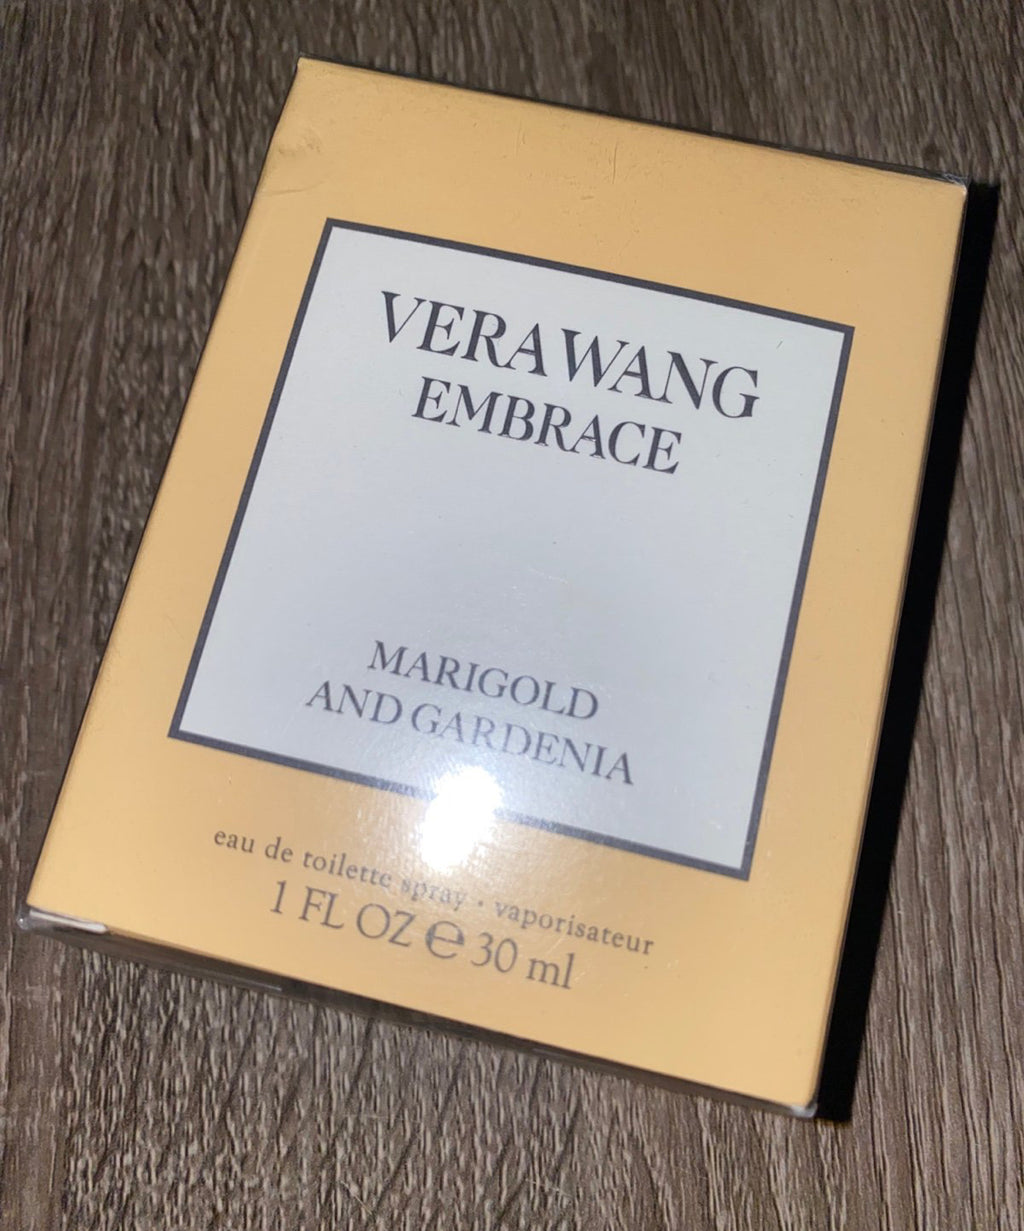 Vera Wang Embrace Marigold and Gardenia